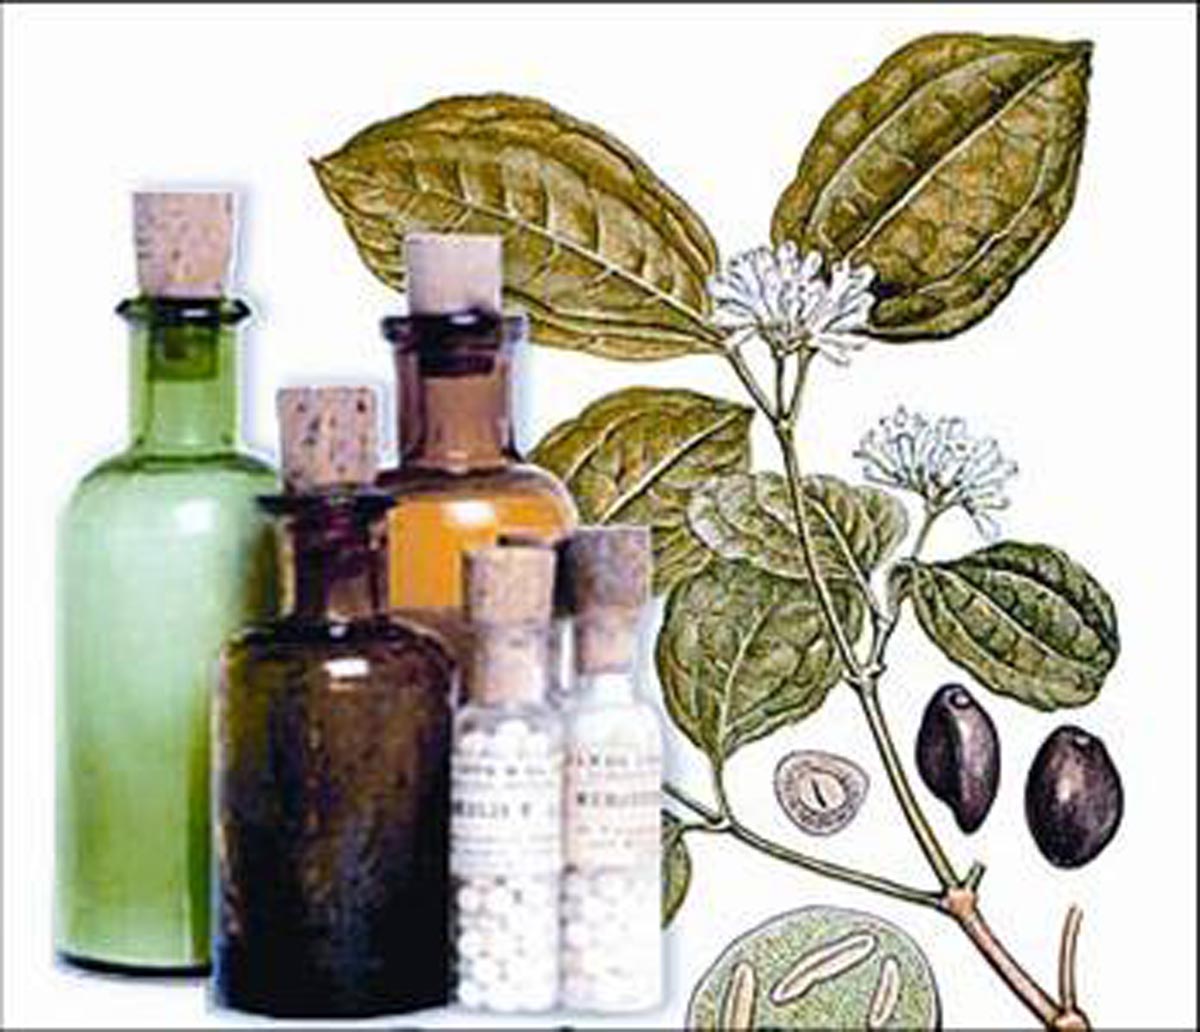 http://dramaristela.files.wordpress.com/2010/01/homeopatia.jpg